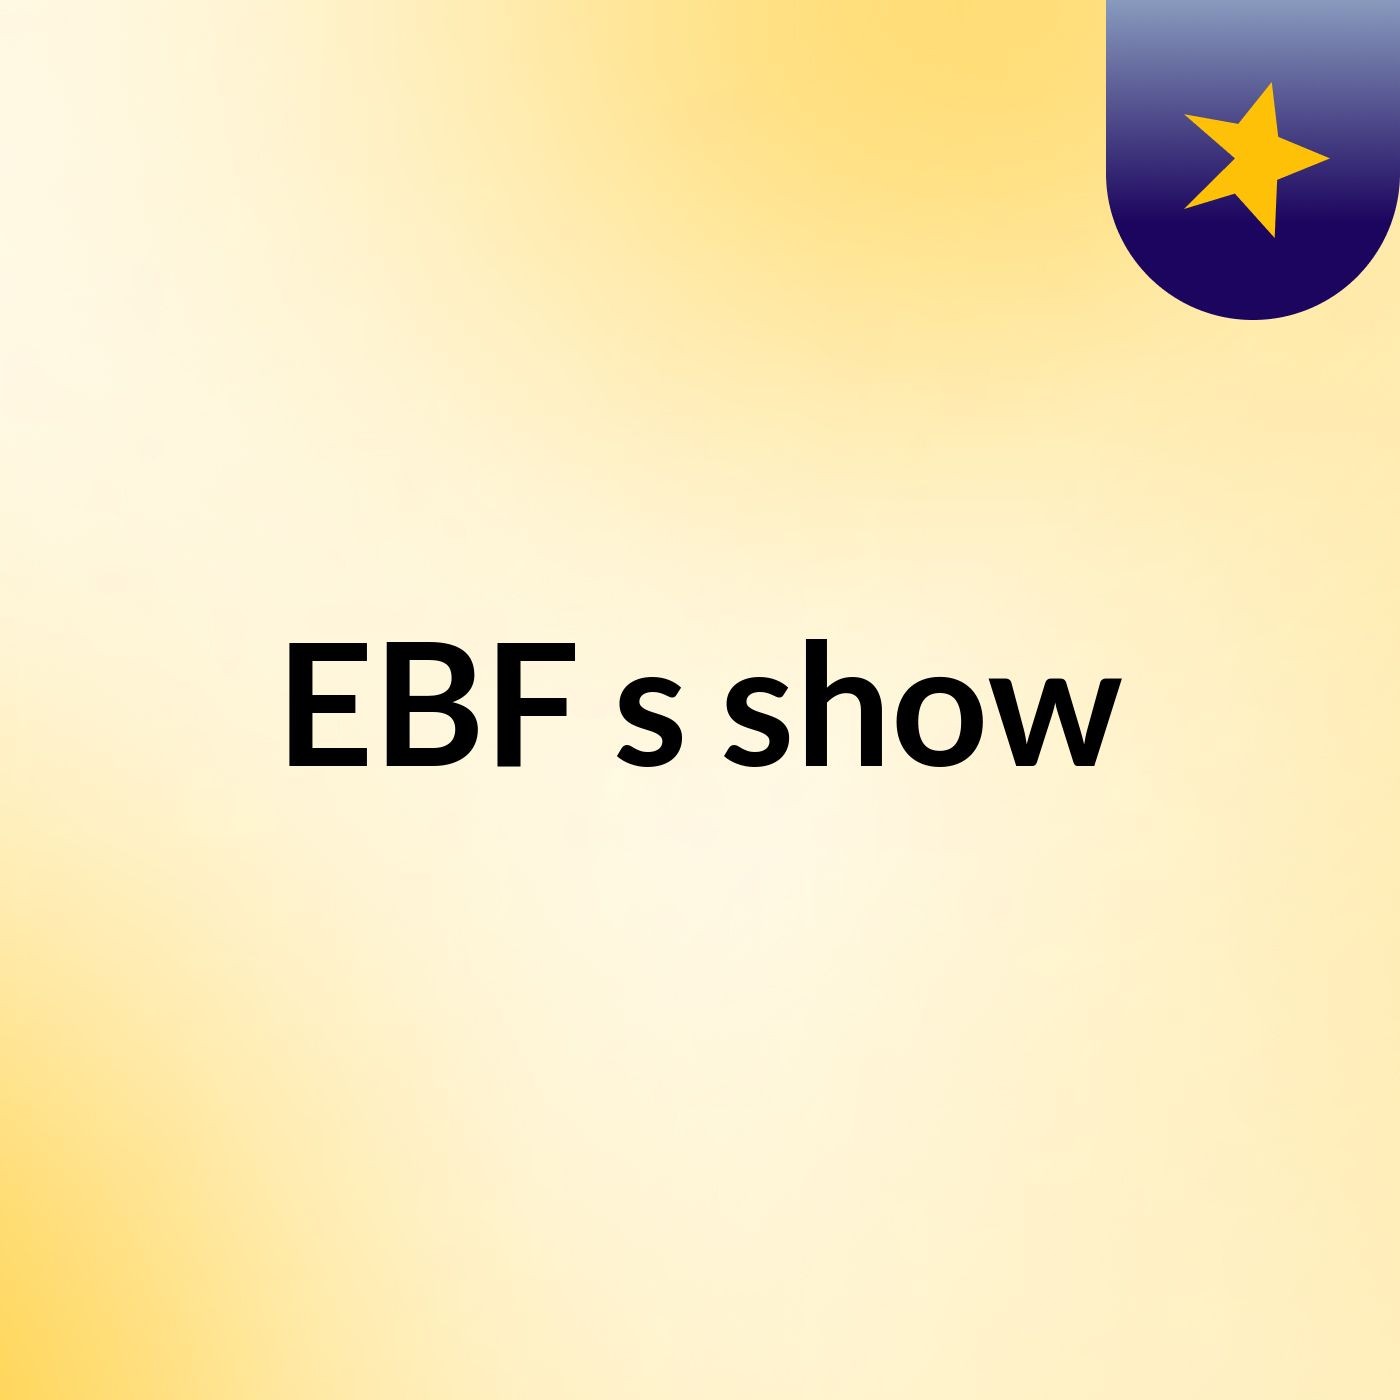 EBF's show